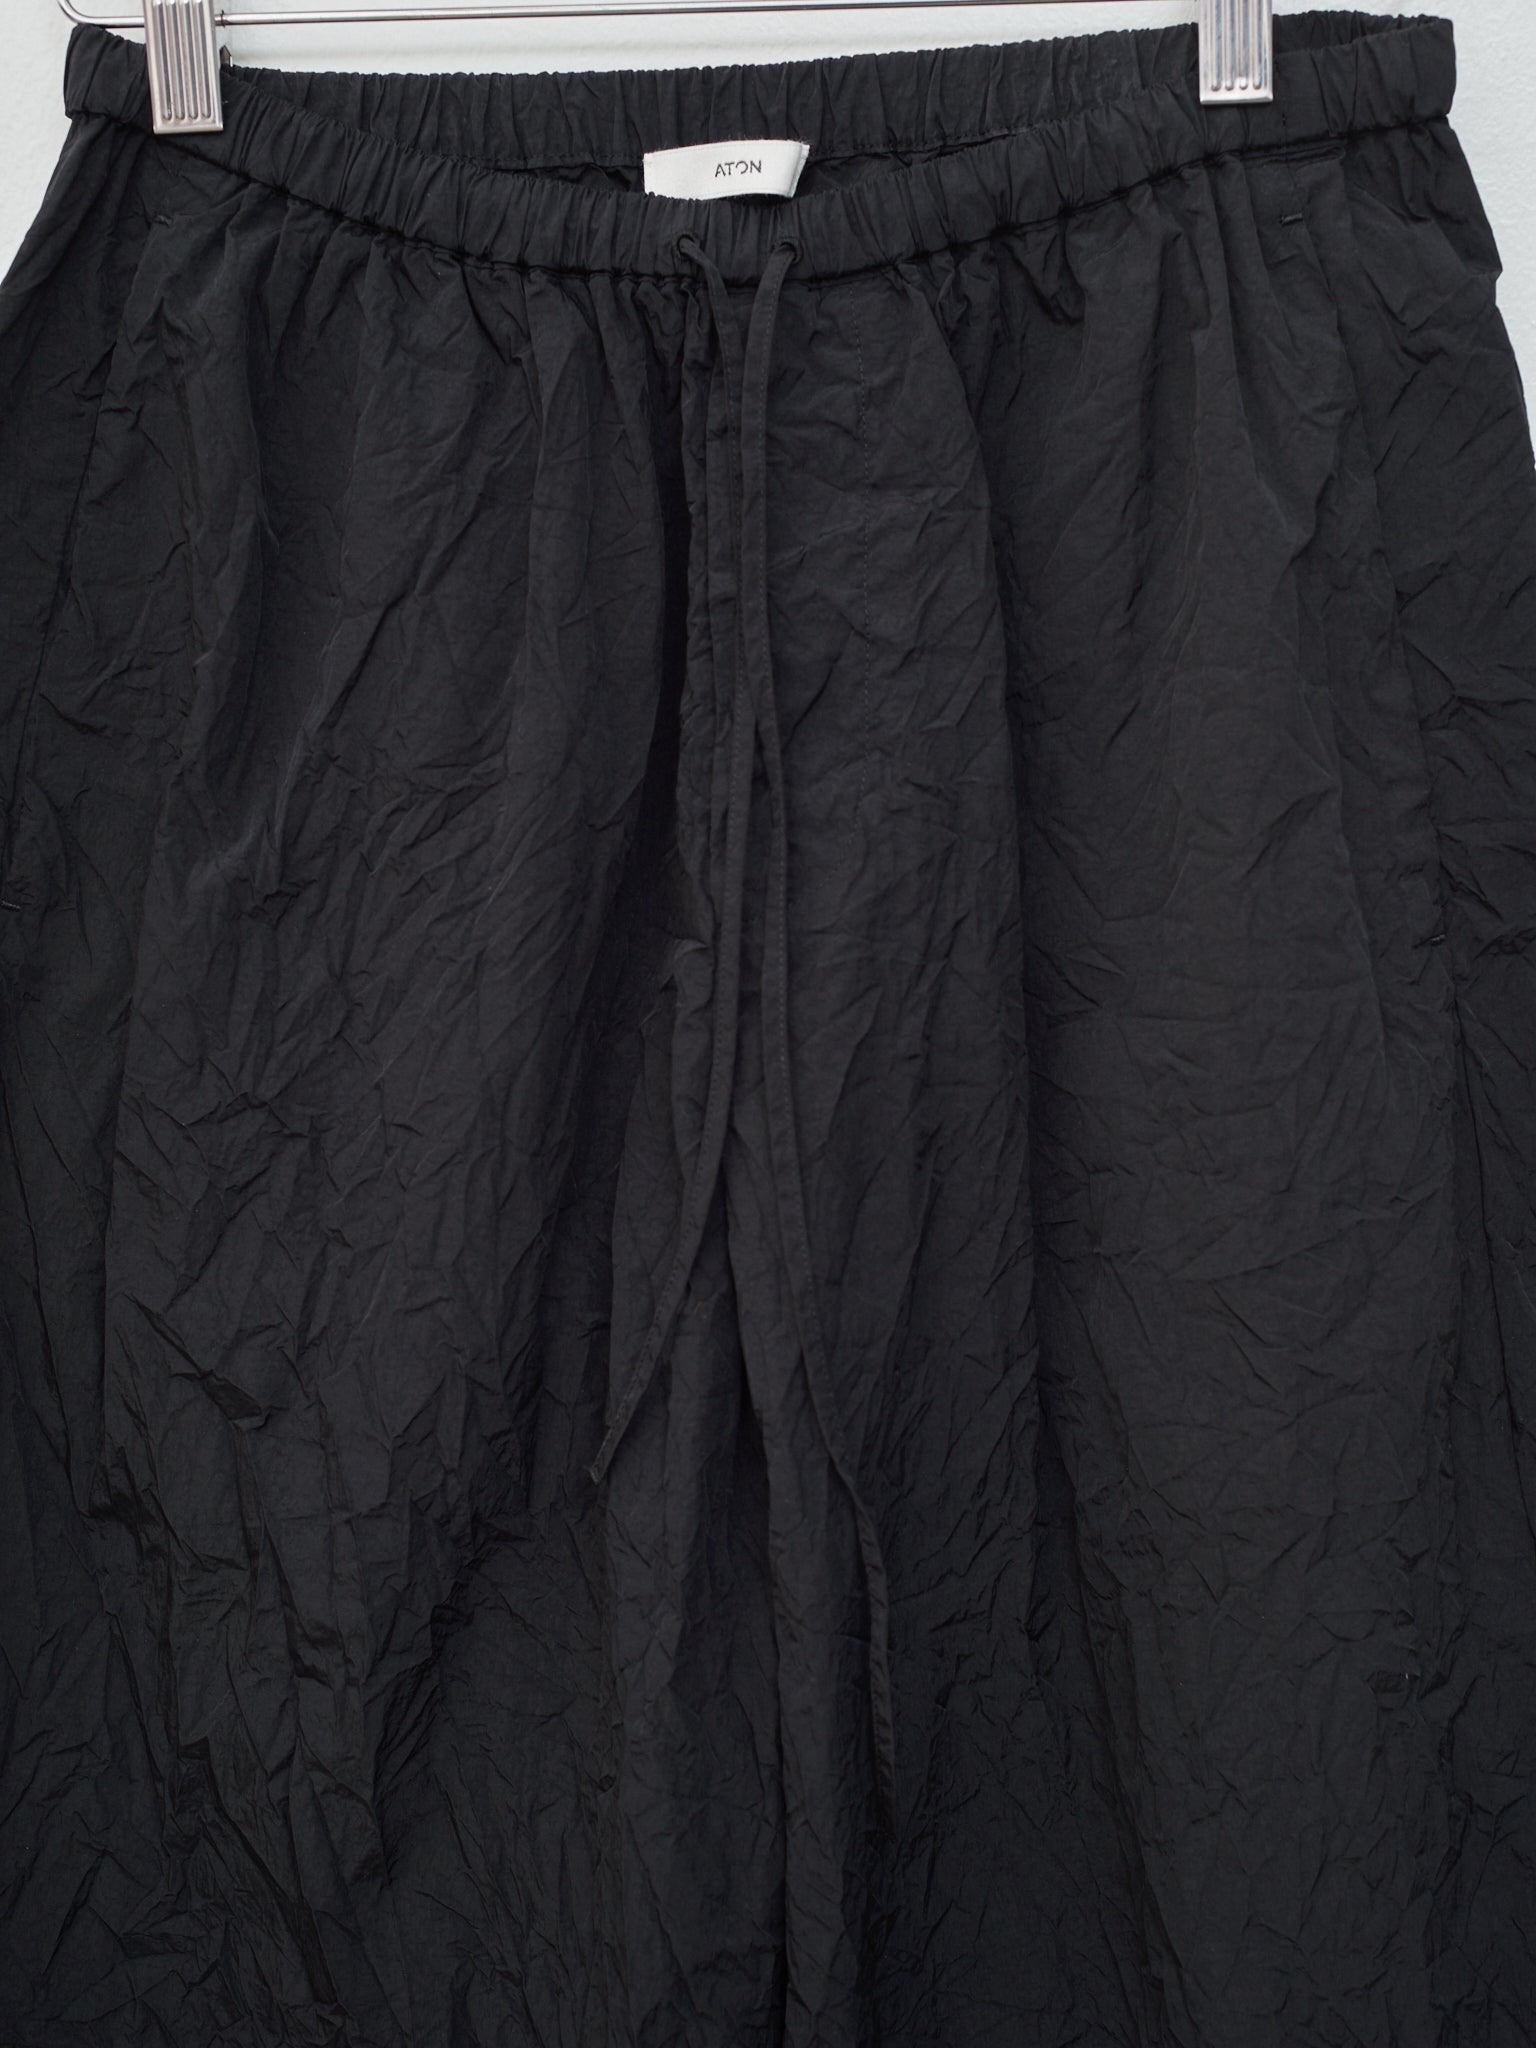 Namu Shop - Aton Catch Washer Nylon Over Pants - Black